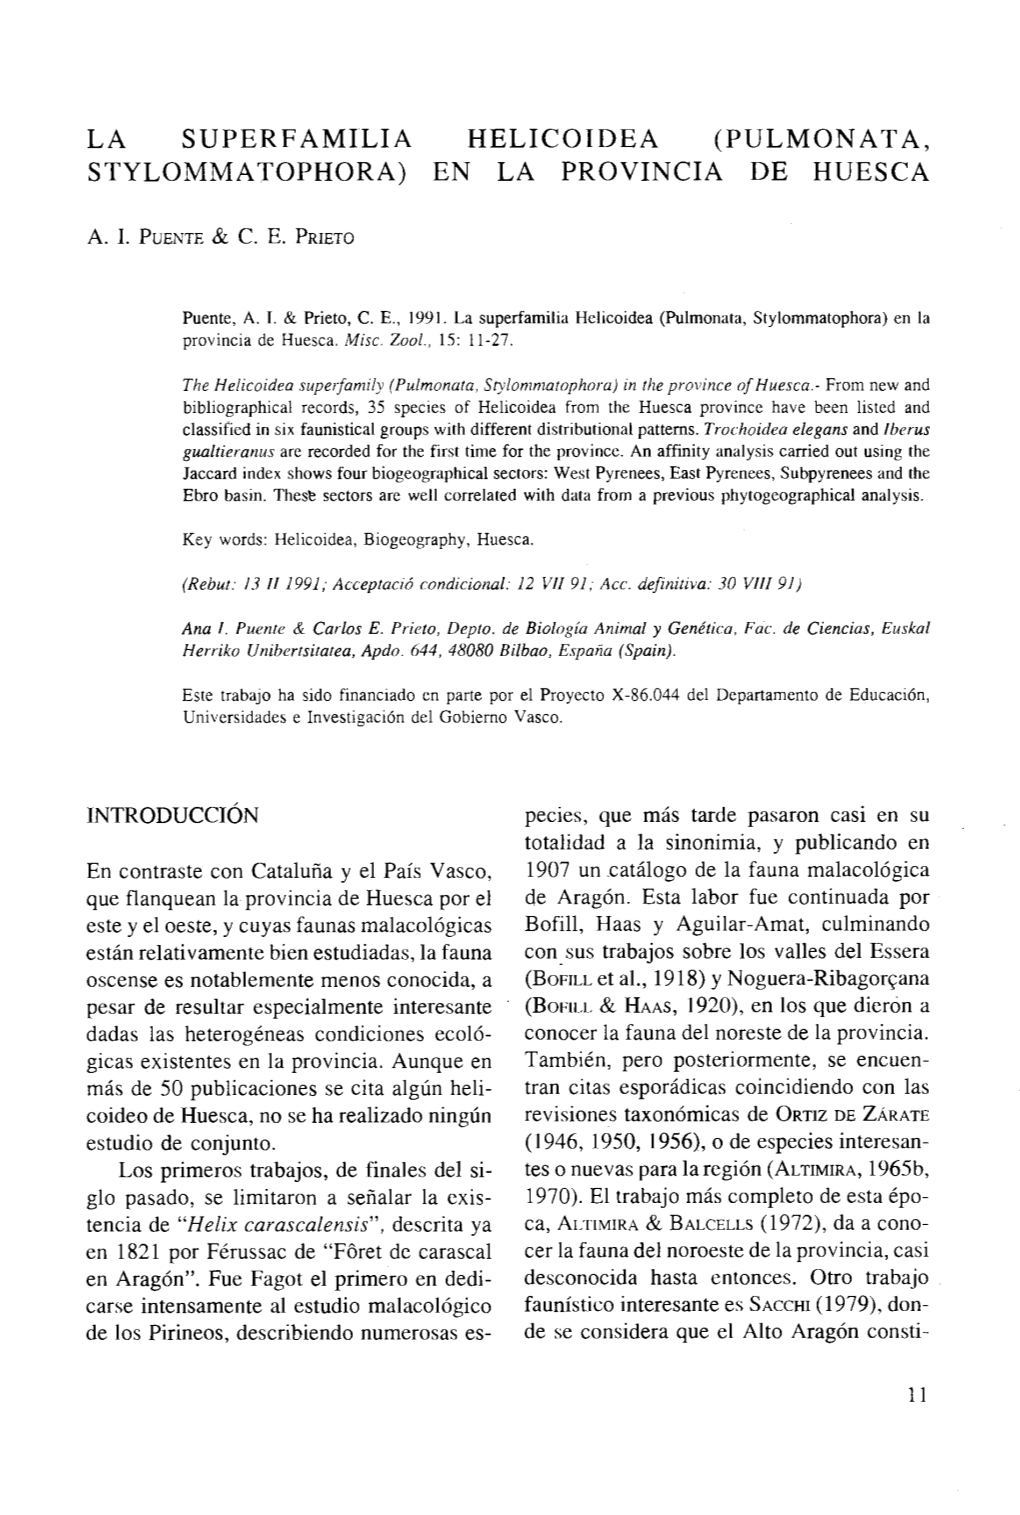 La Superfamilia Helicoidea (Pulmonata, Stylommatophora) En La Provincia De Huesca